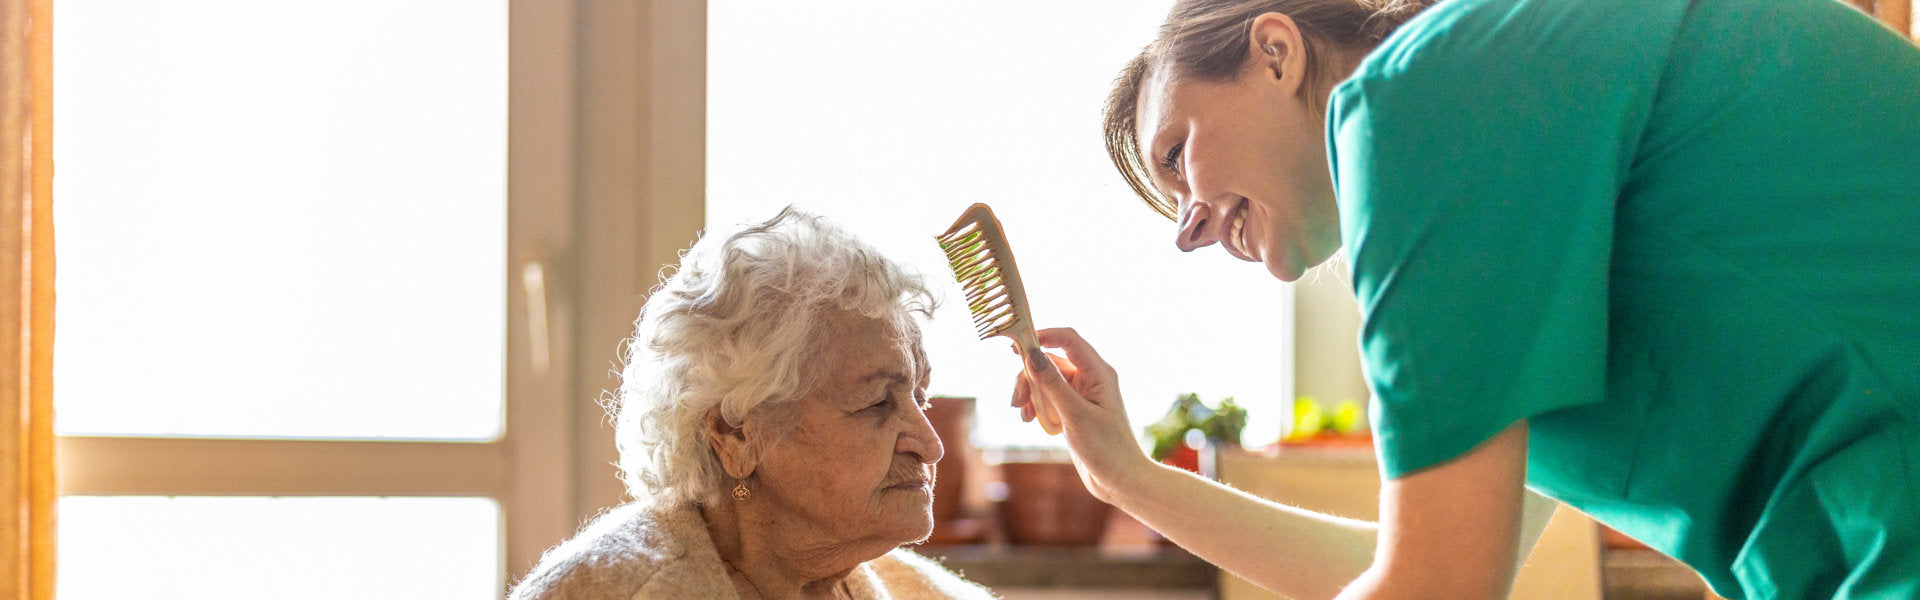 caregiver combing the senior woman's hair